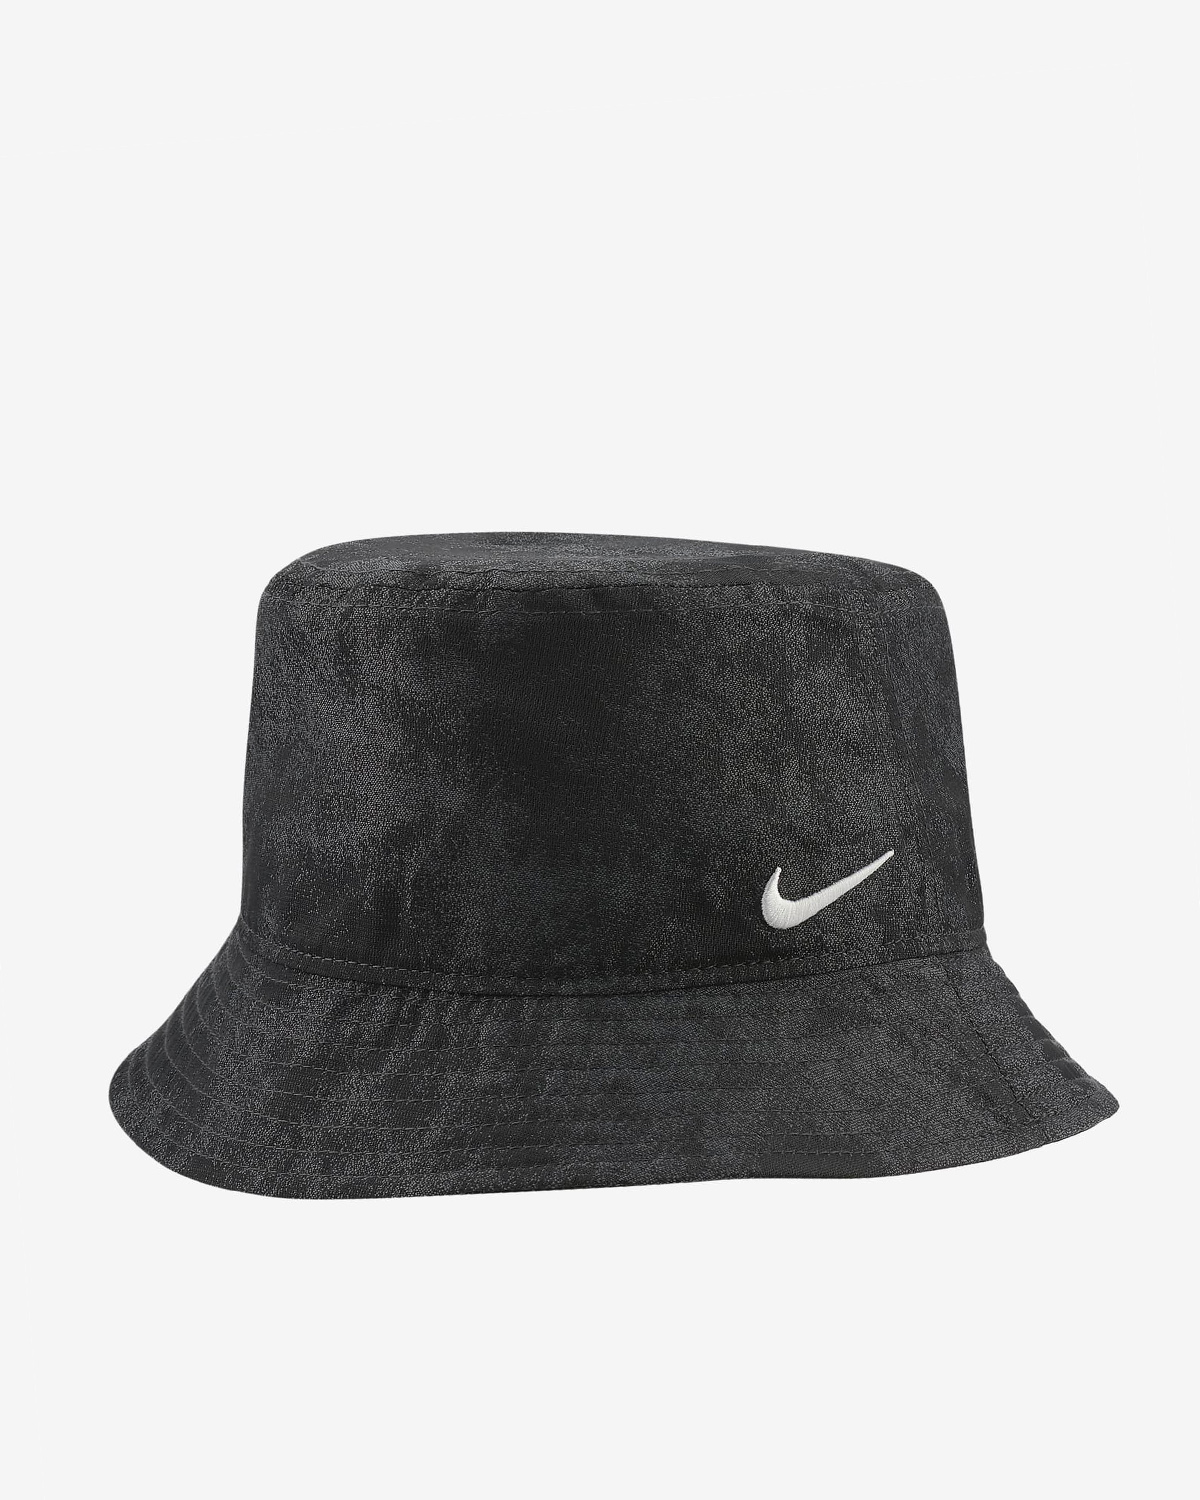 NRG Bucket Nike Headwear Hats Black